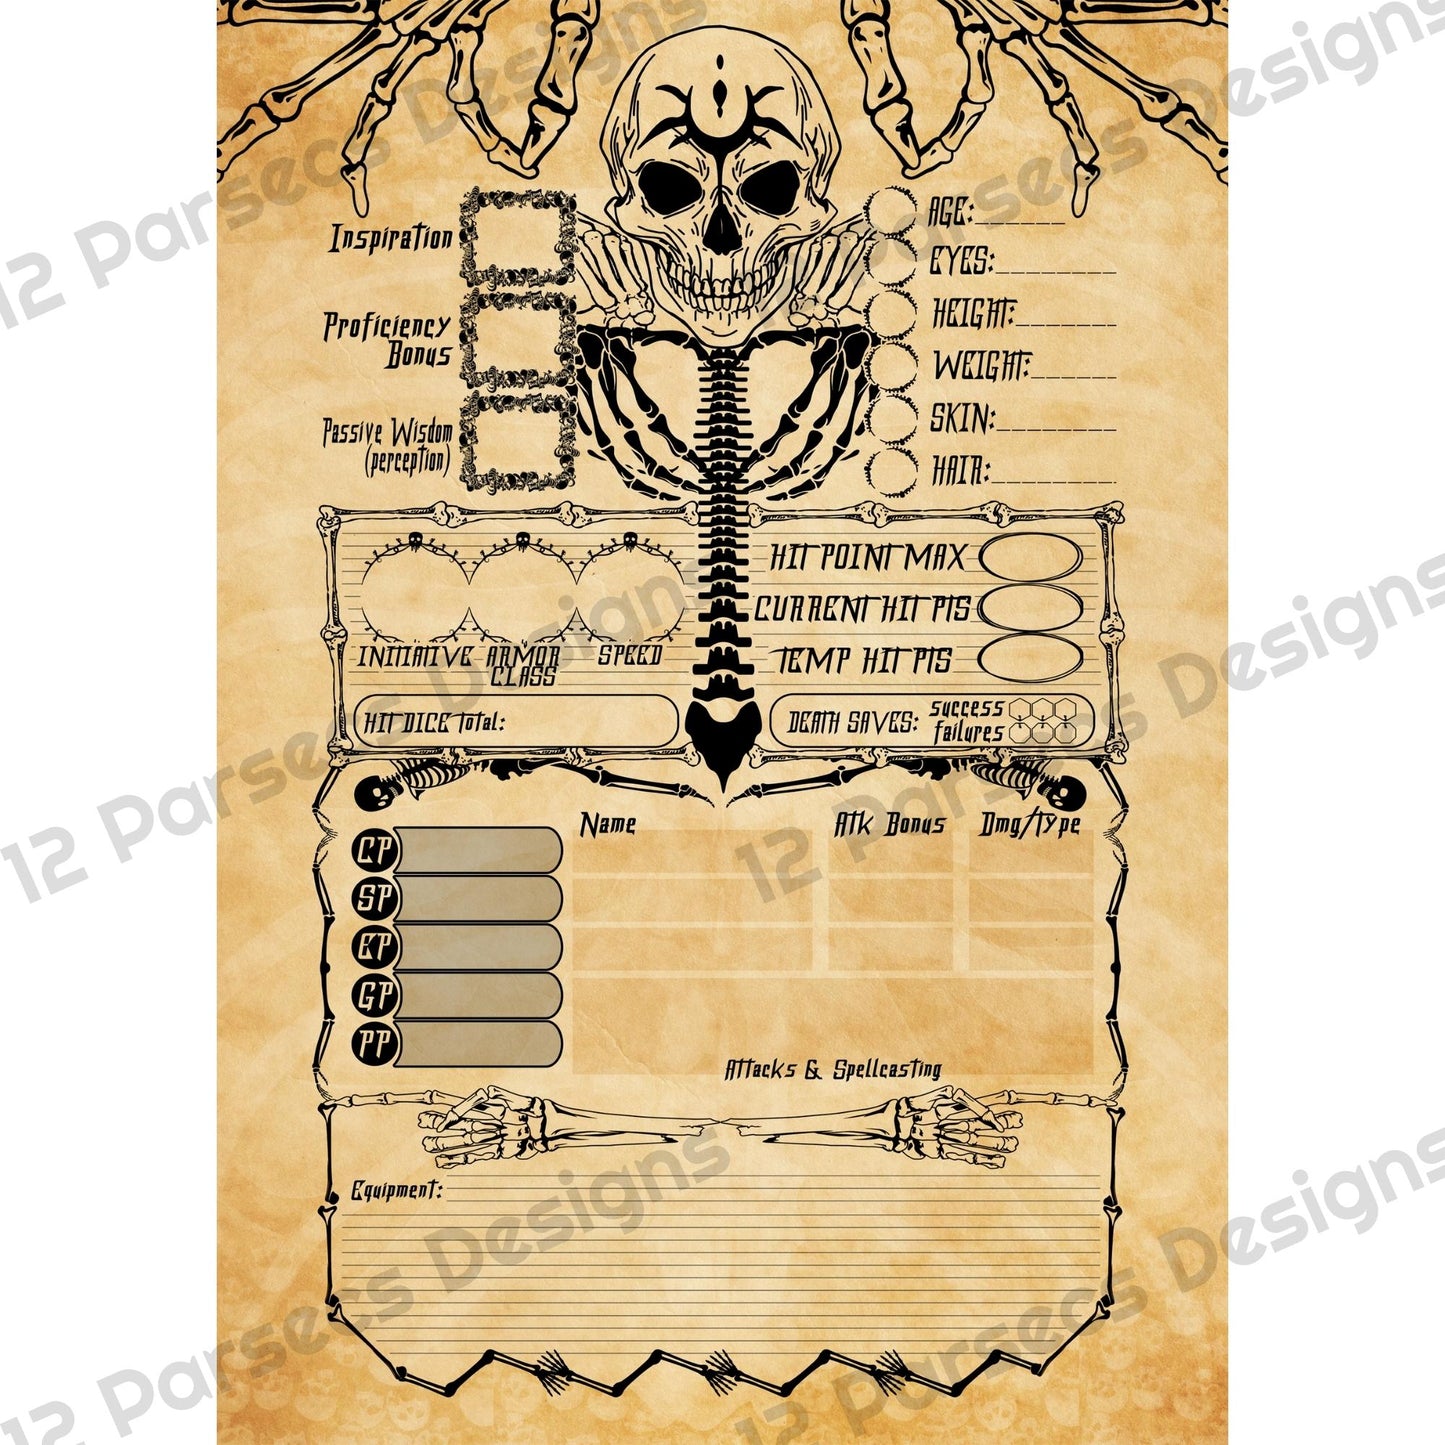 Boneyard TTRPG Character Sheet (DIGITAL DOWNLOAD)